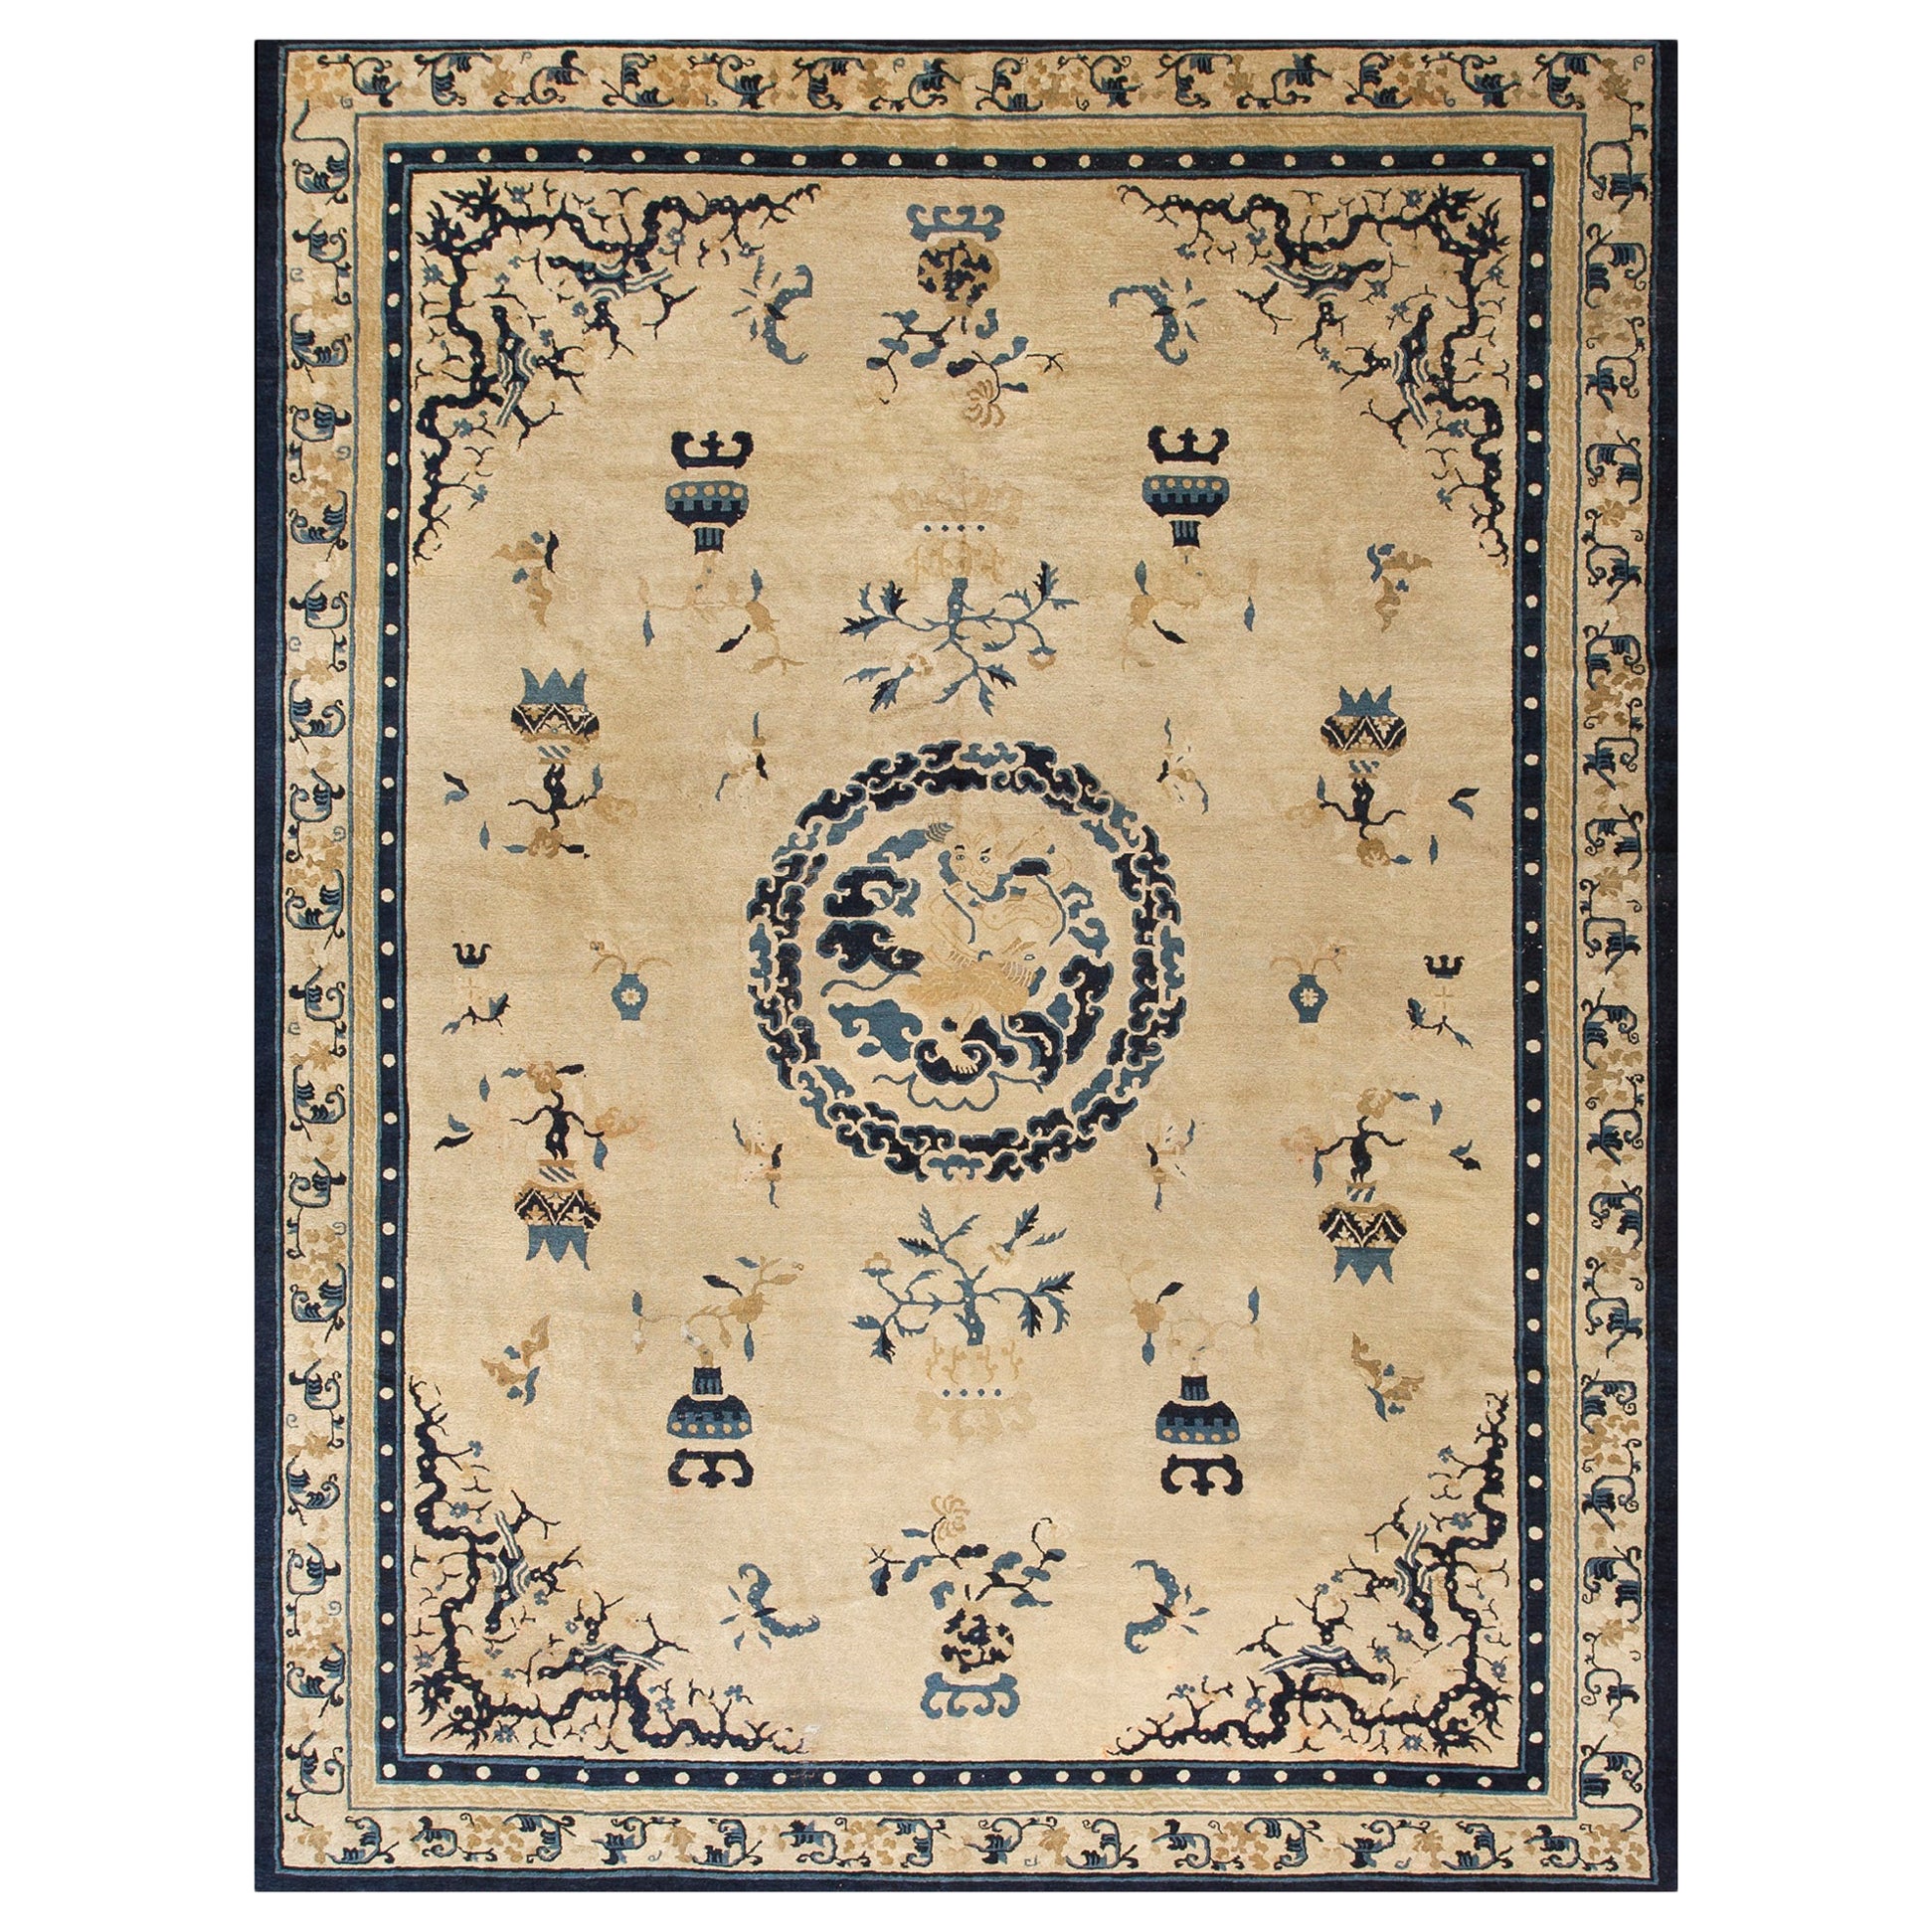 Late 19th Century Chinese Peking Carpet ( 8'8" x 11'5" - 264 x 248 )